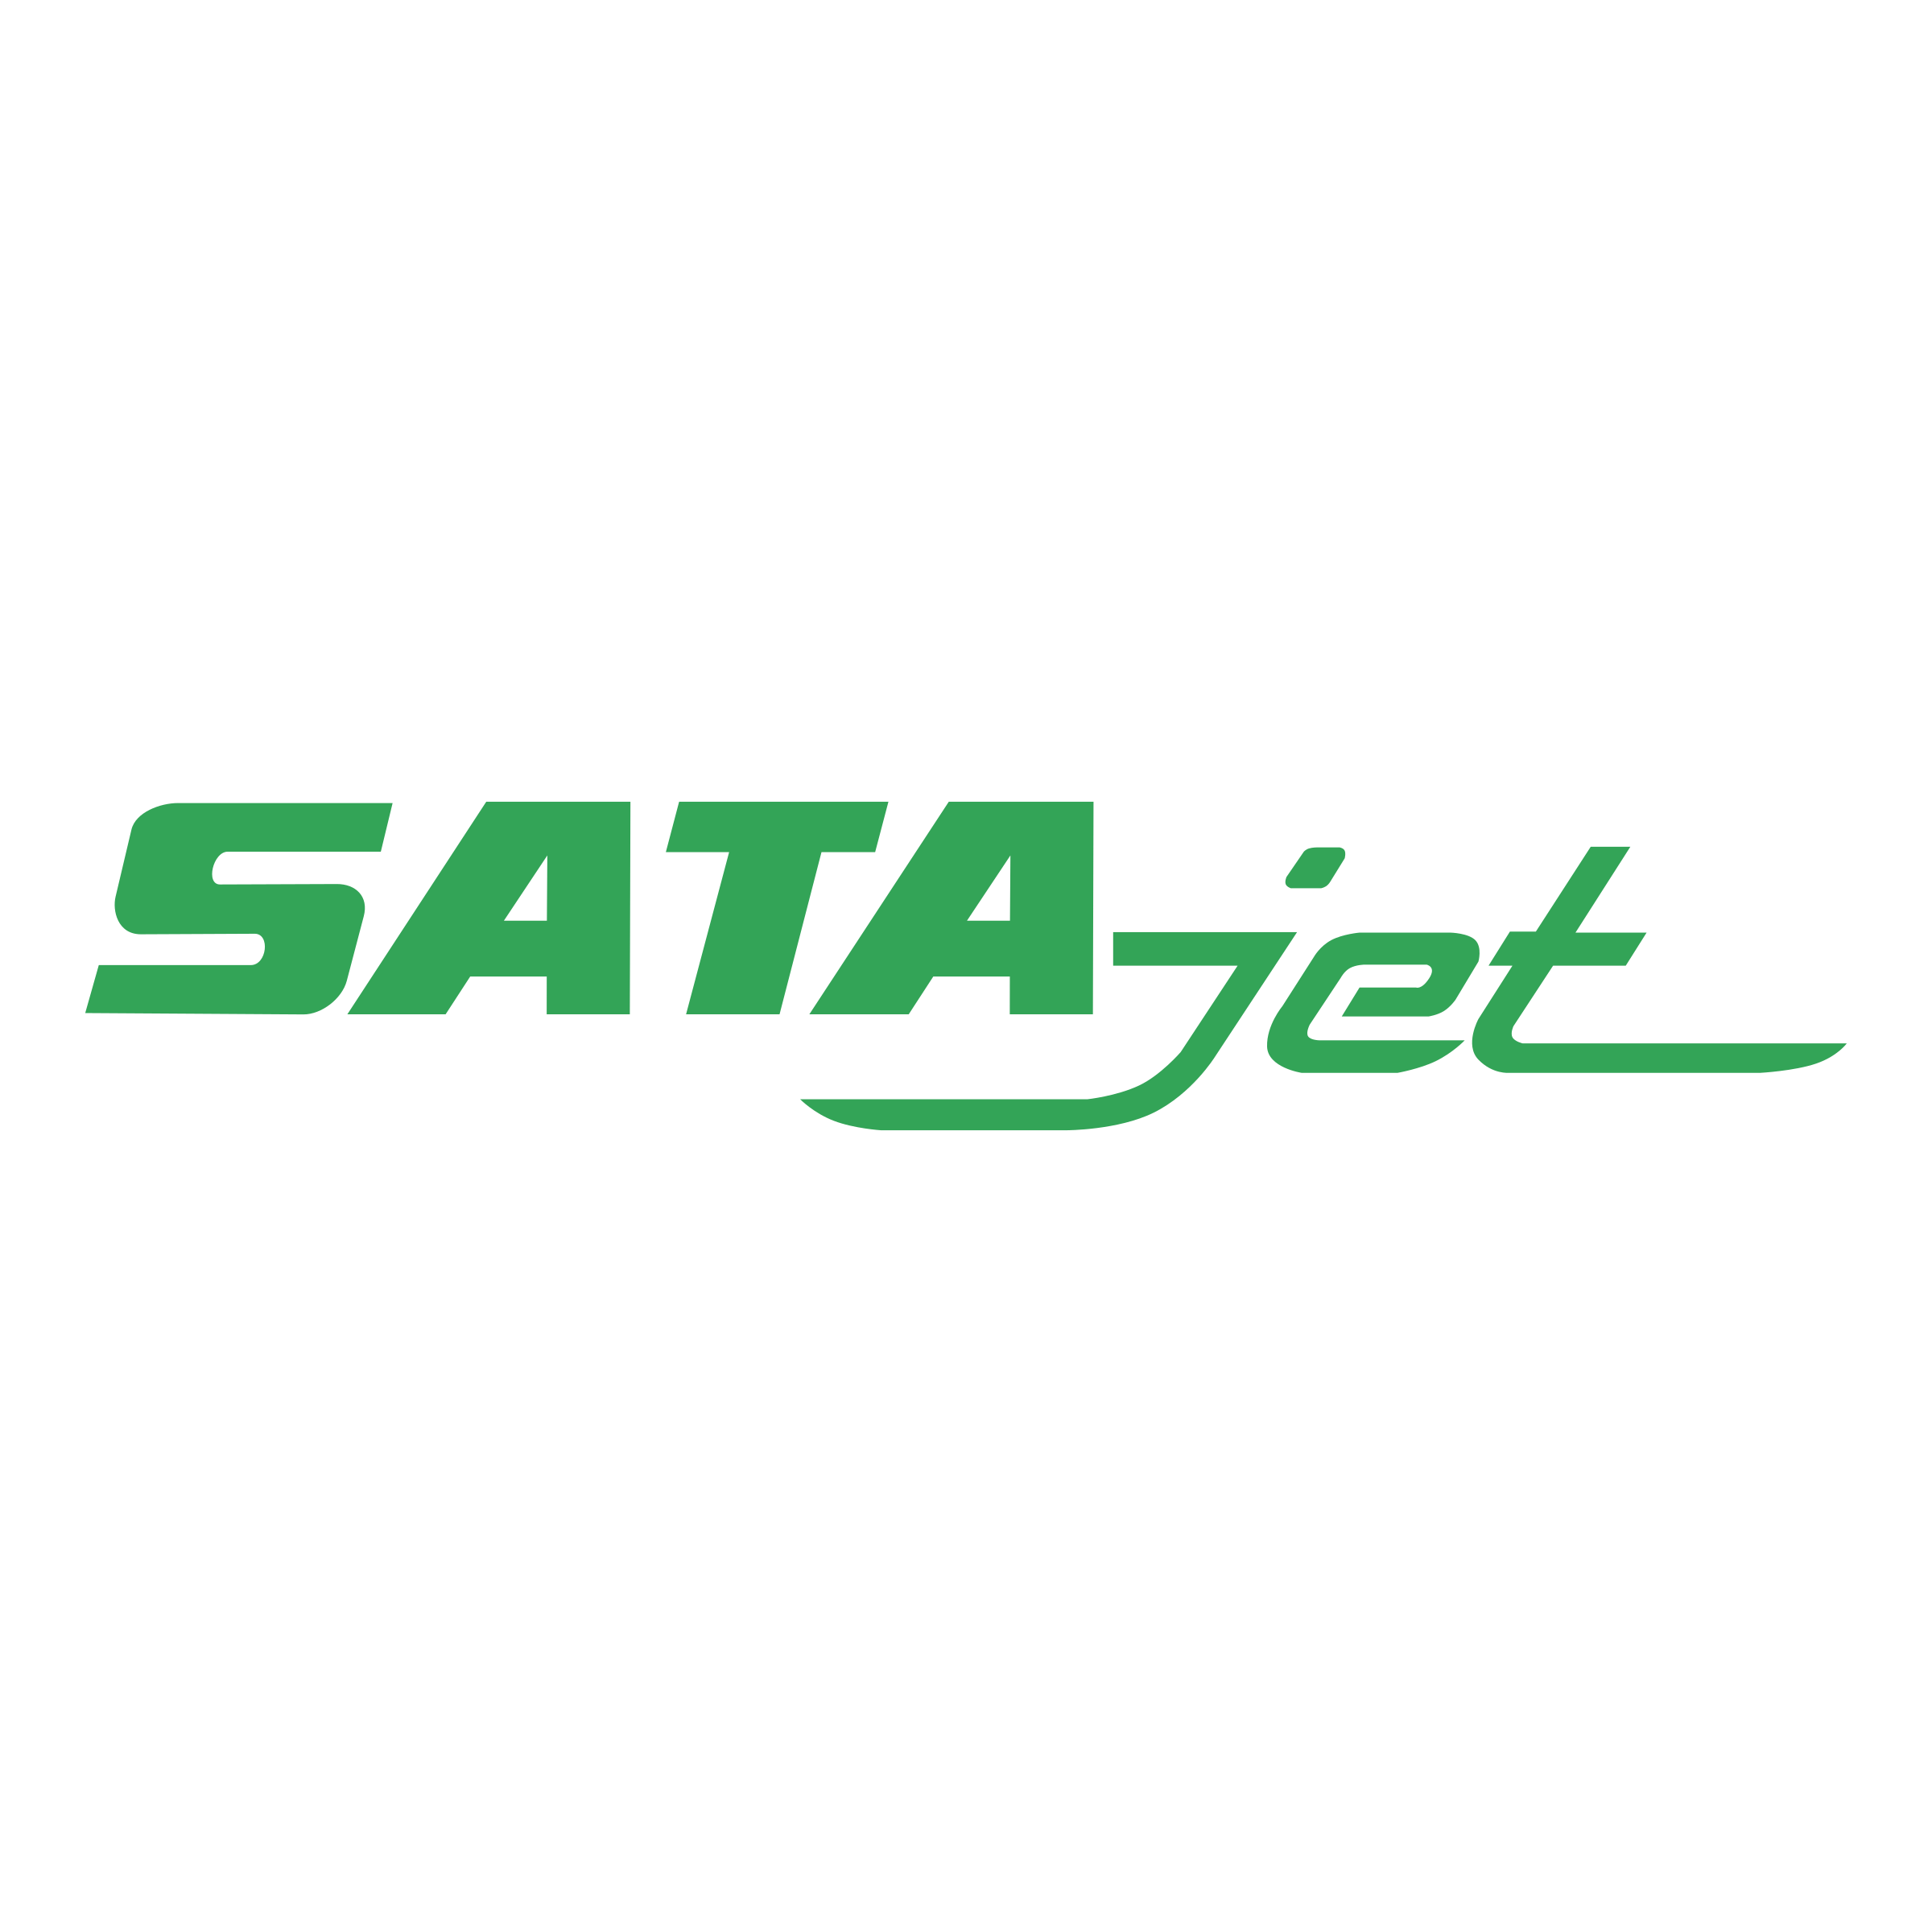 SATA Logo - Sata Jet Logo PNG Transparent & SVG Vector - Freebie Supply